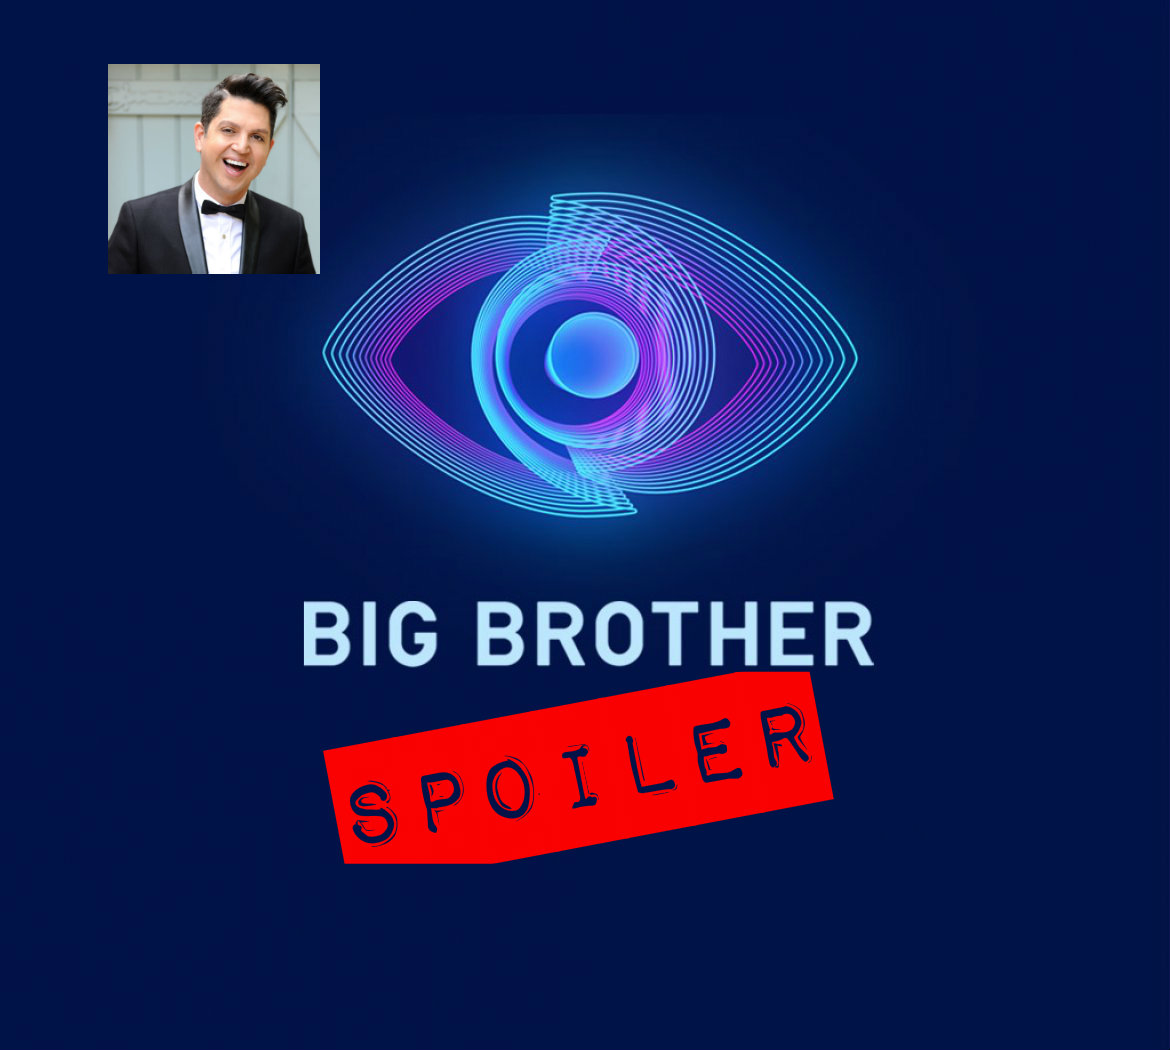 Big Brother: Νέοι παίκτες «εισβάλλουν» στο ριάλιτι